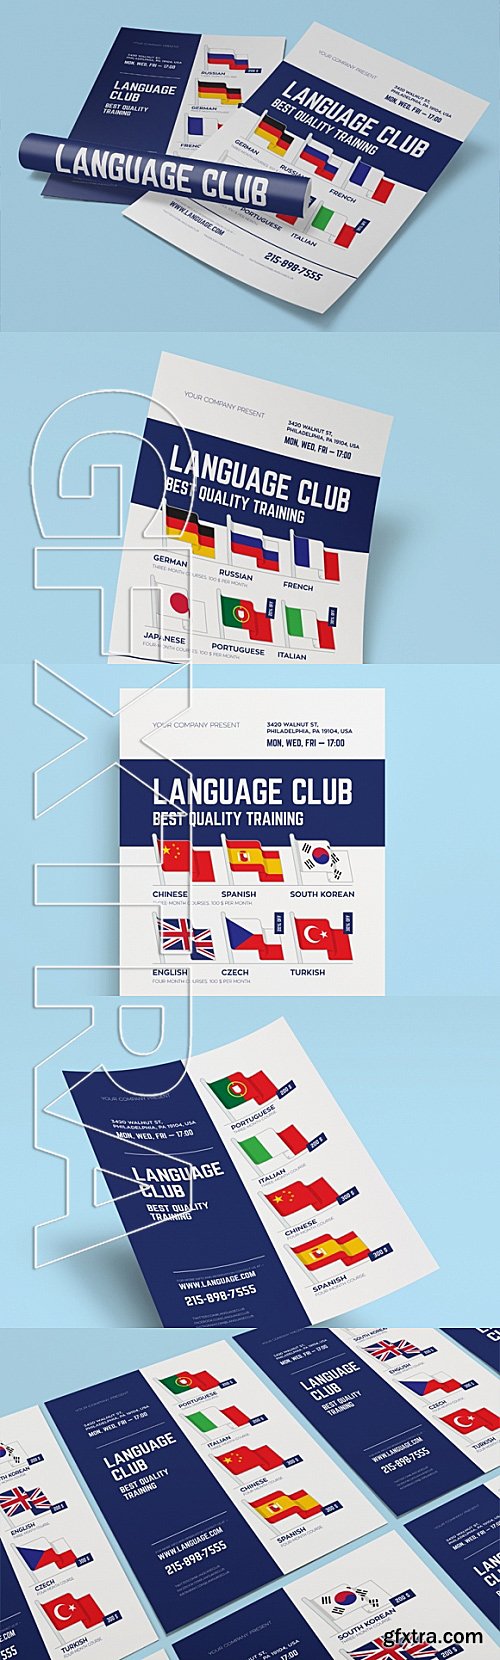 CM - Language center poster template 577937